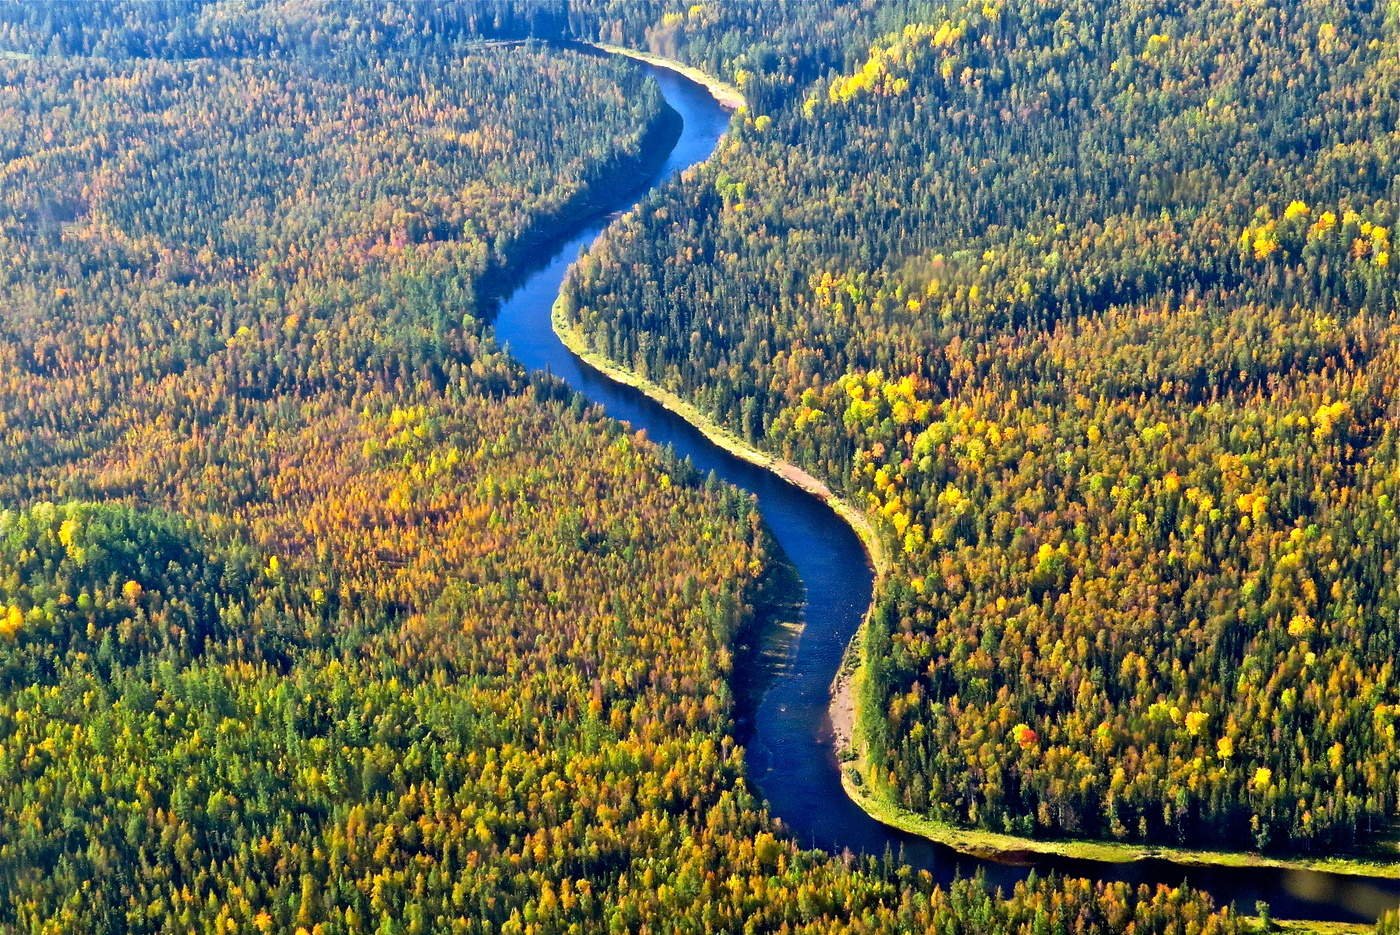 Река сибири приток енисея